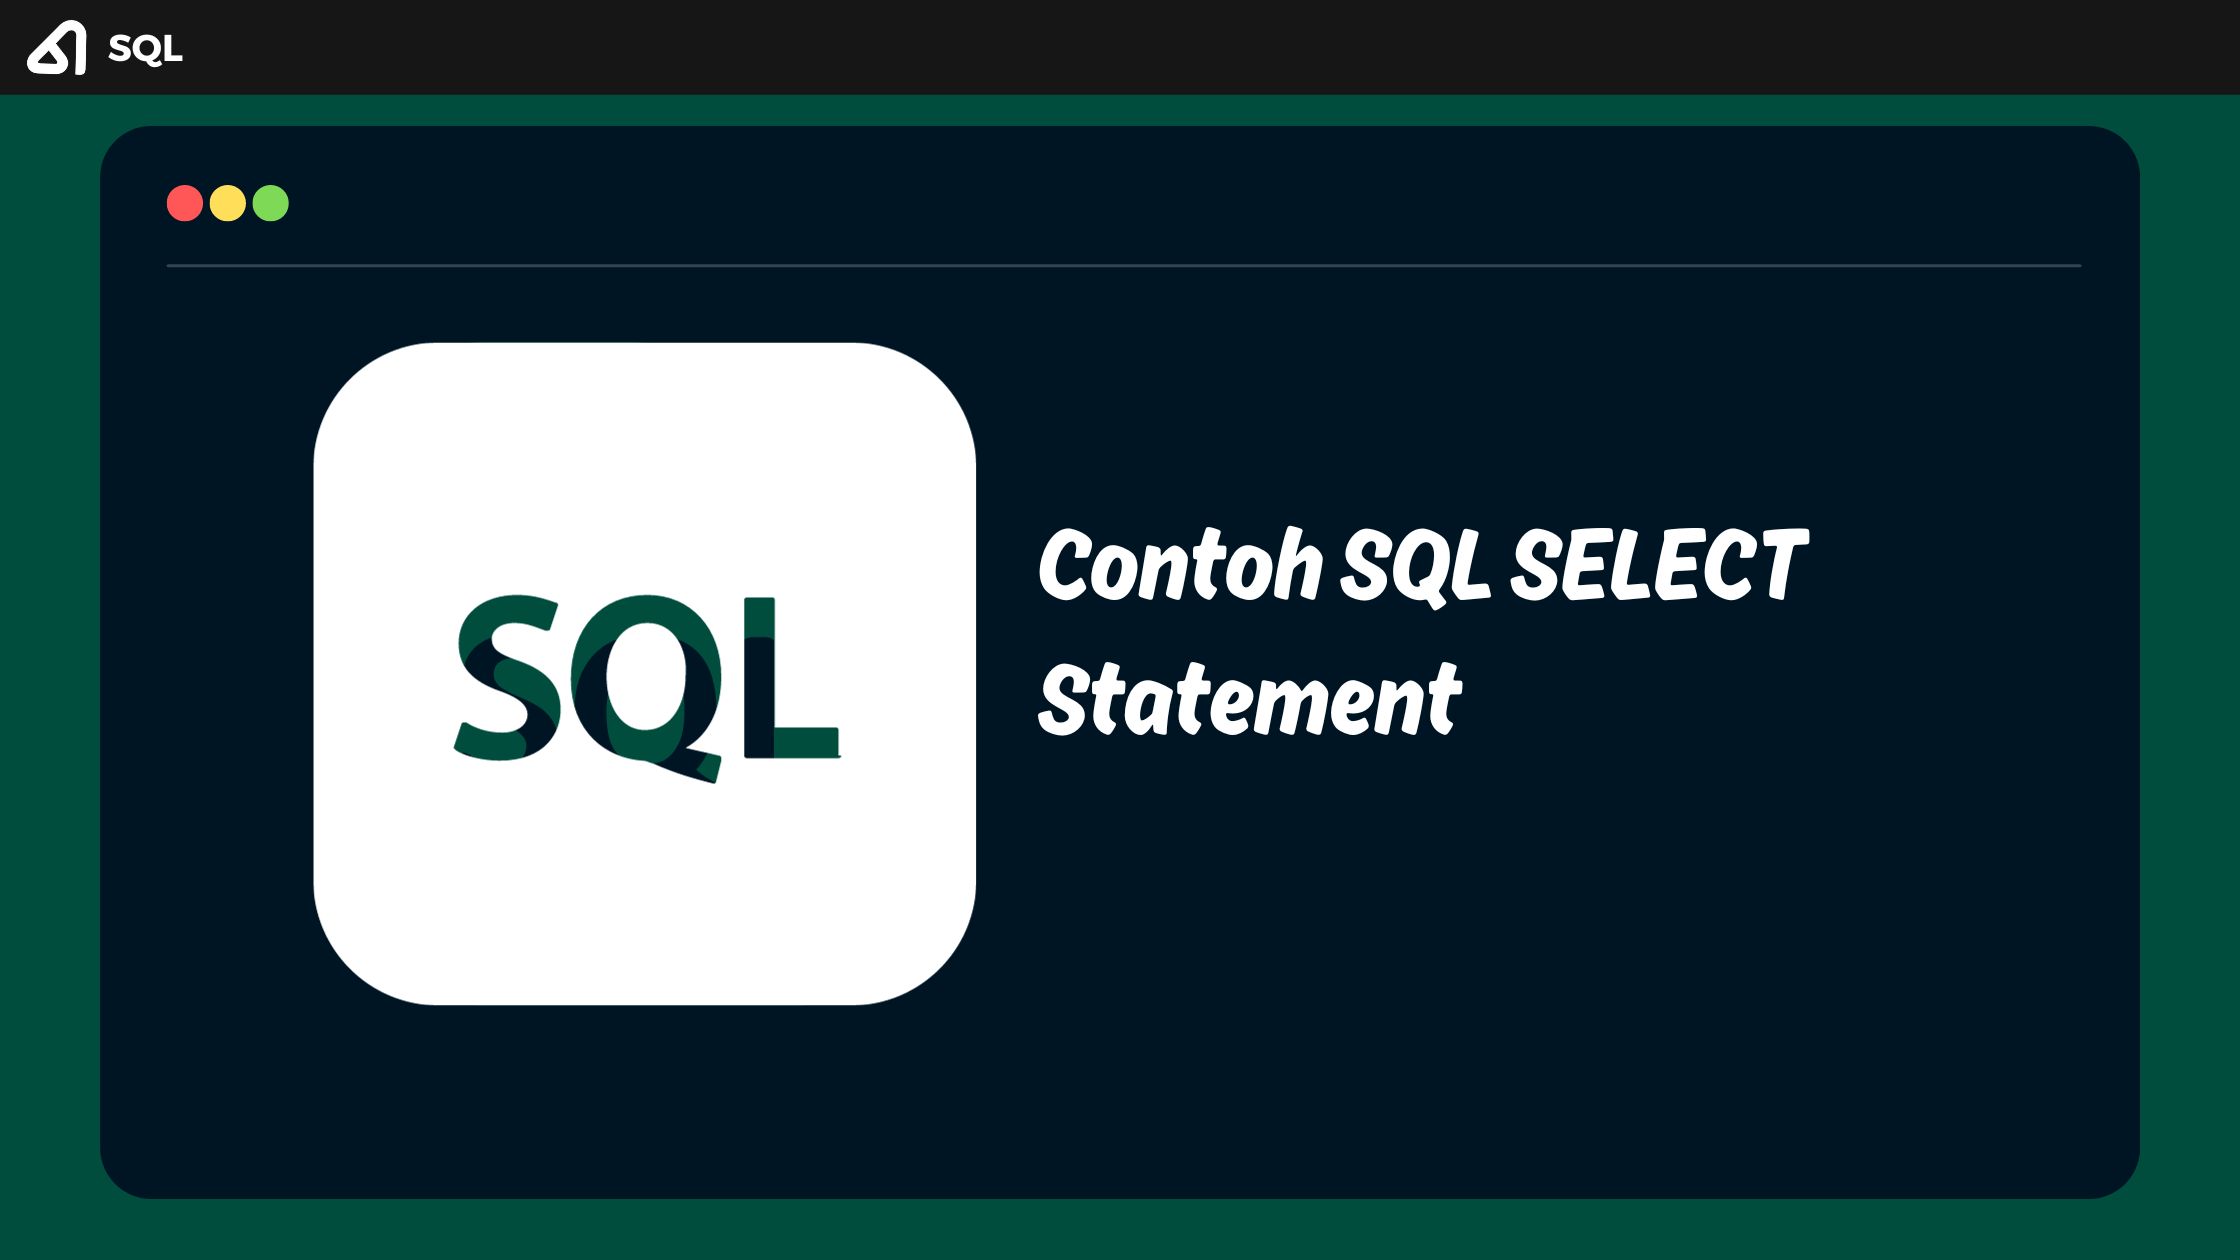 Contoh SQL SELECT Statement